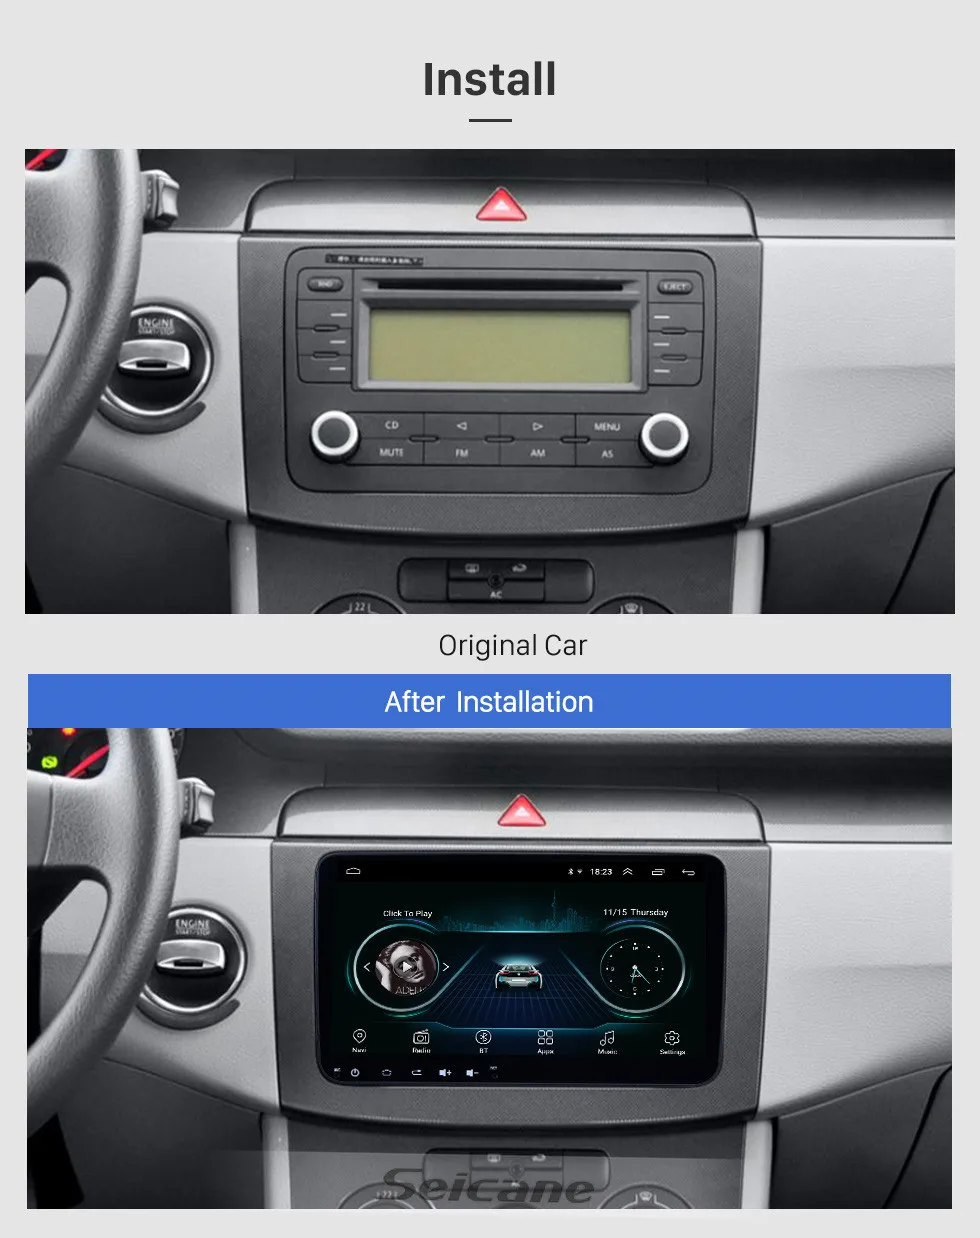 Seicane 2din Android 8.1 9" Car Multimedia Player GPS for Volkswagen Skoda Octavia golf 5 6 touran passat B6 polo tiguan rapid